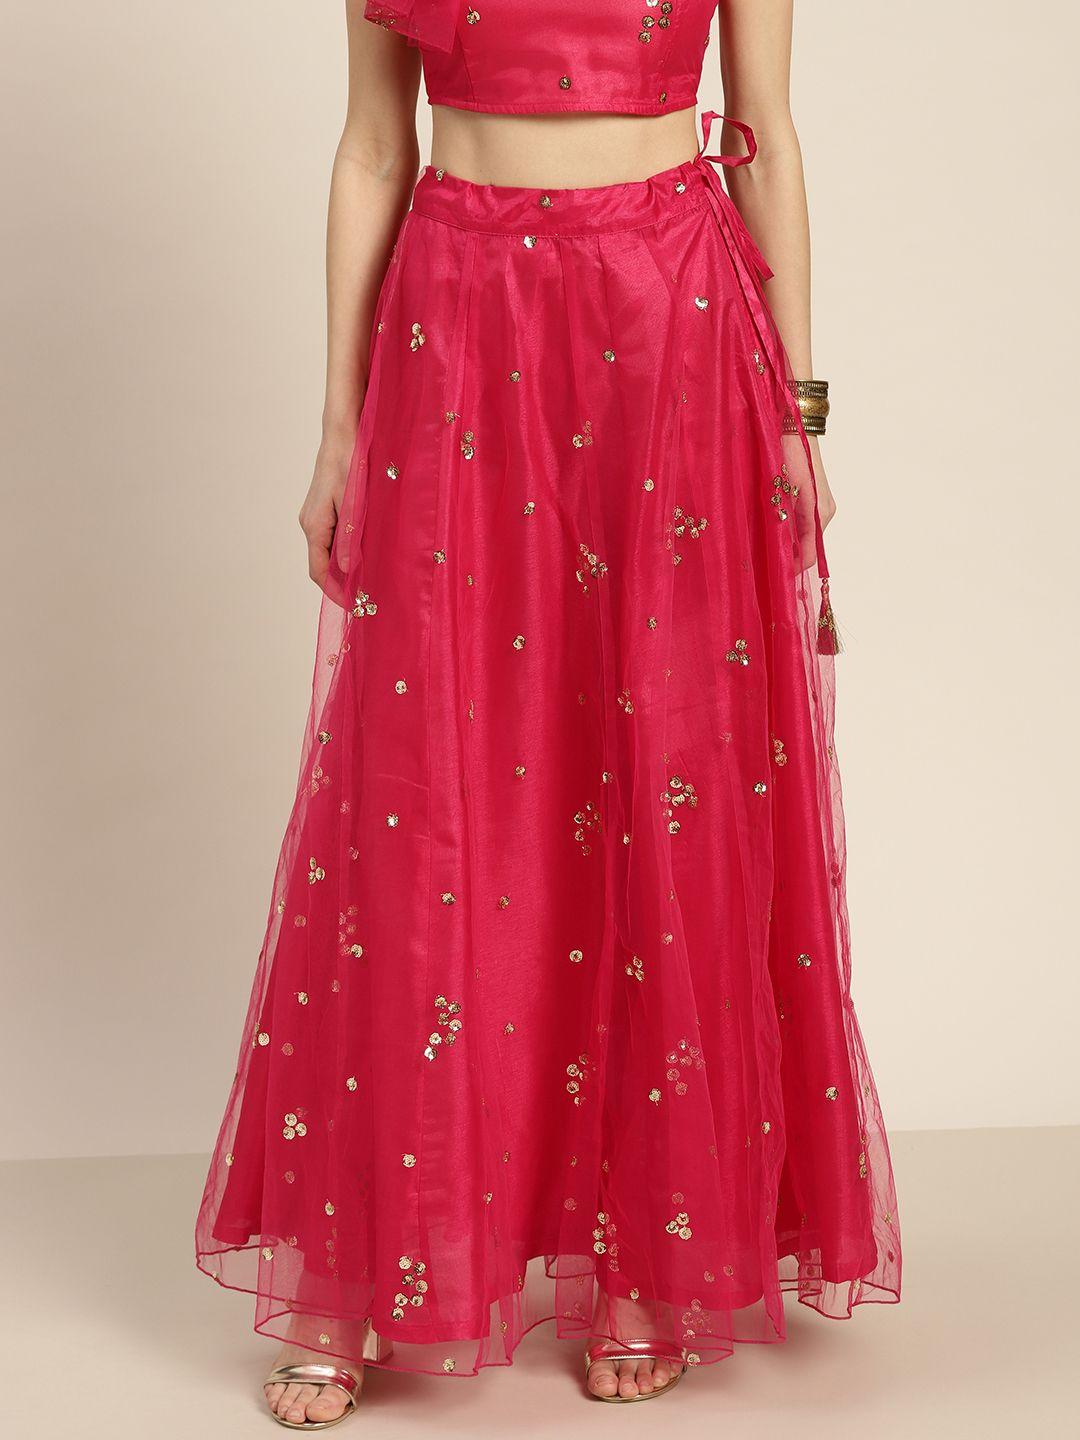 shae by sassafras fuchsia sequinned embellished tulle maxi skirt